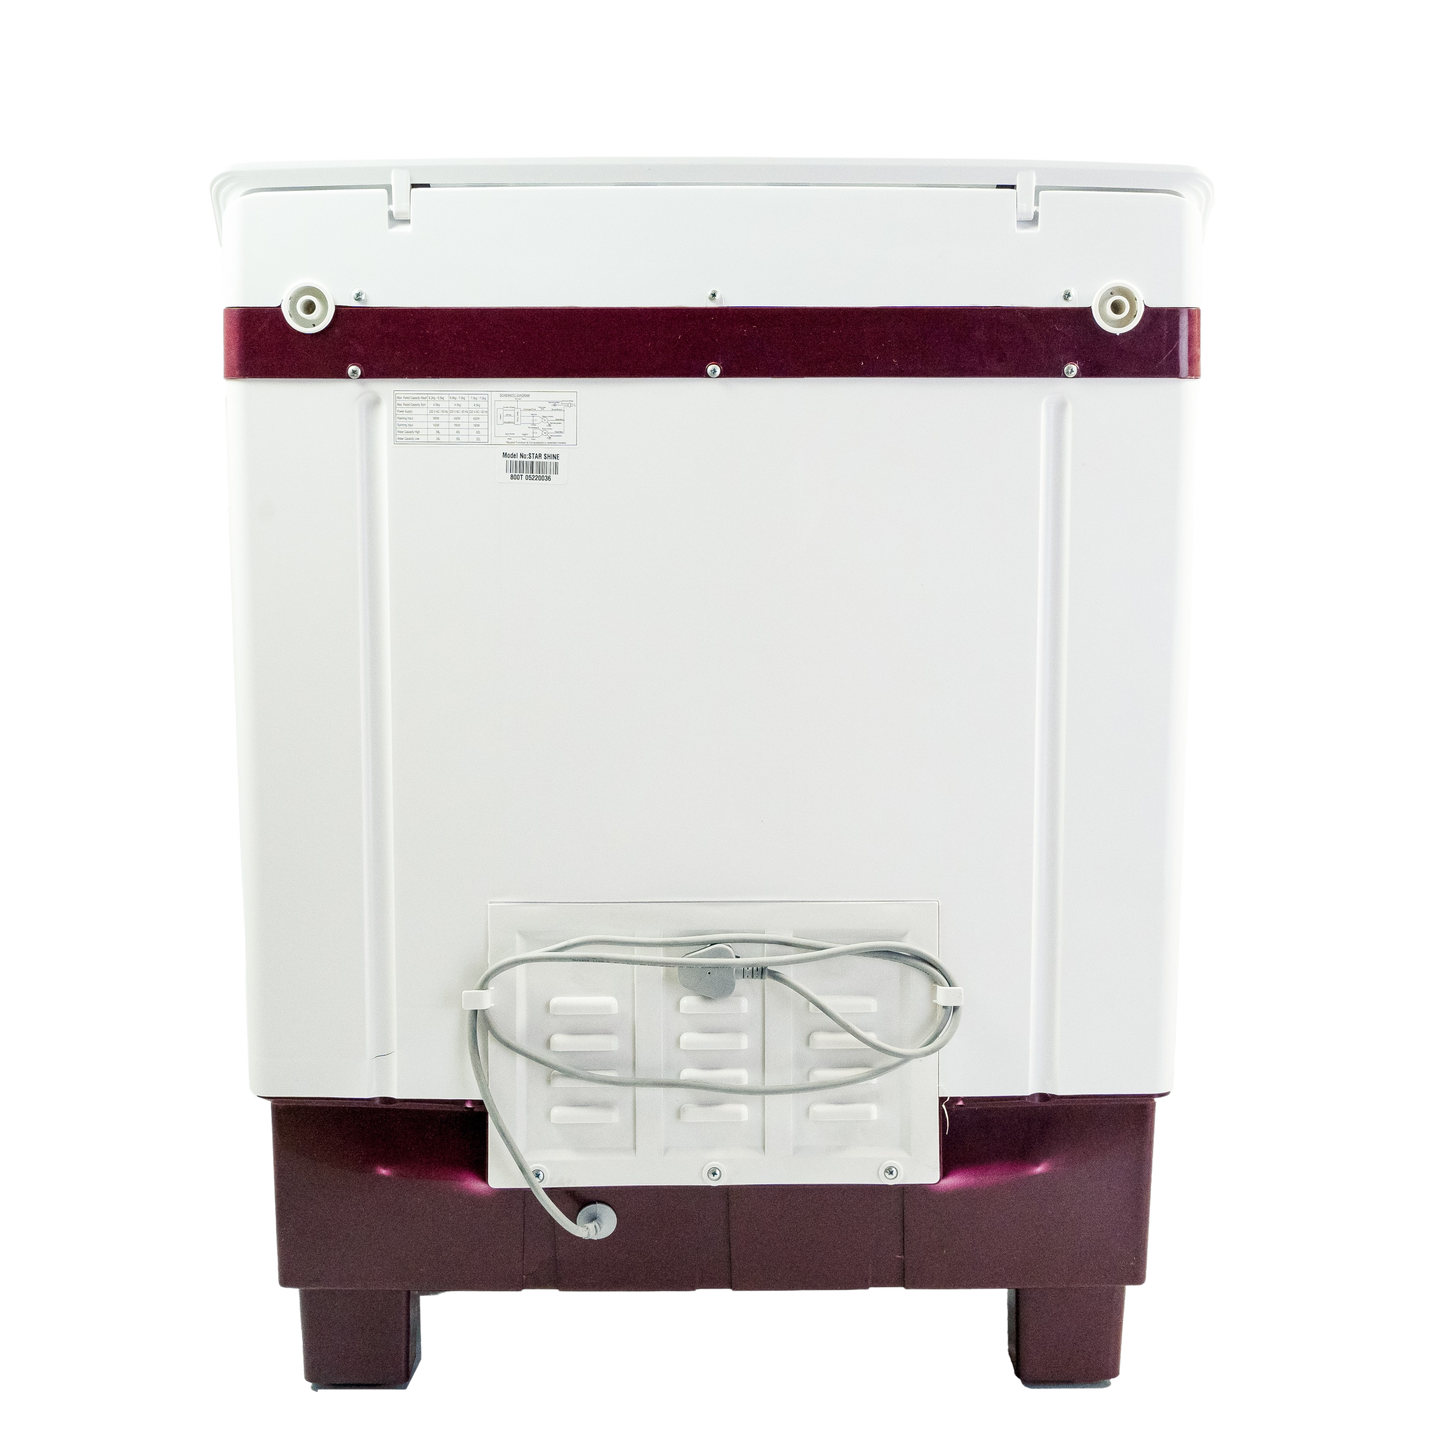 Starshine 8 Kg Semi-Automatic Top Loading Washing Machine